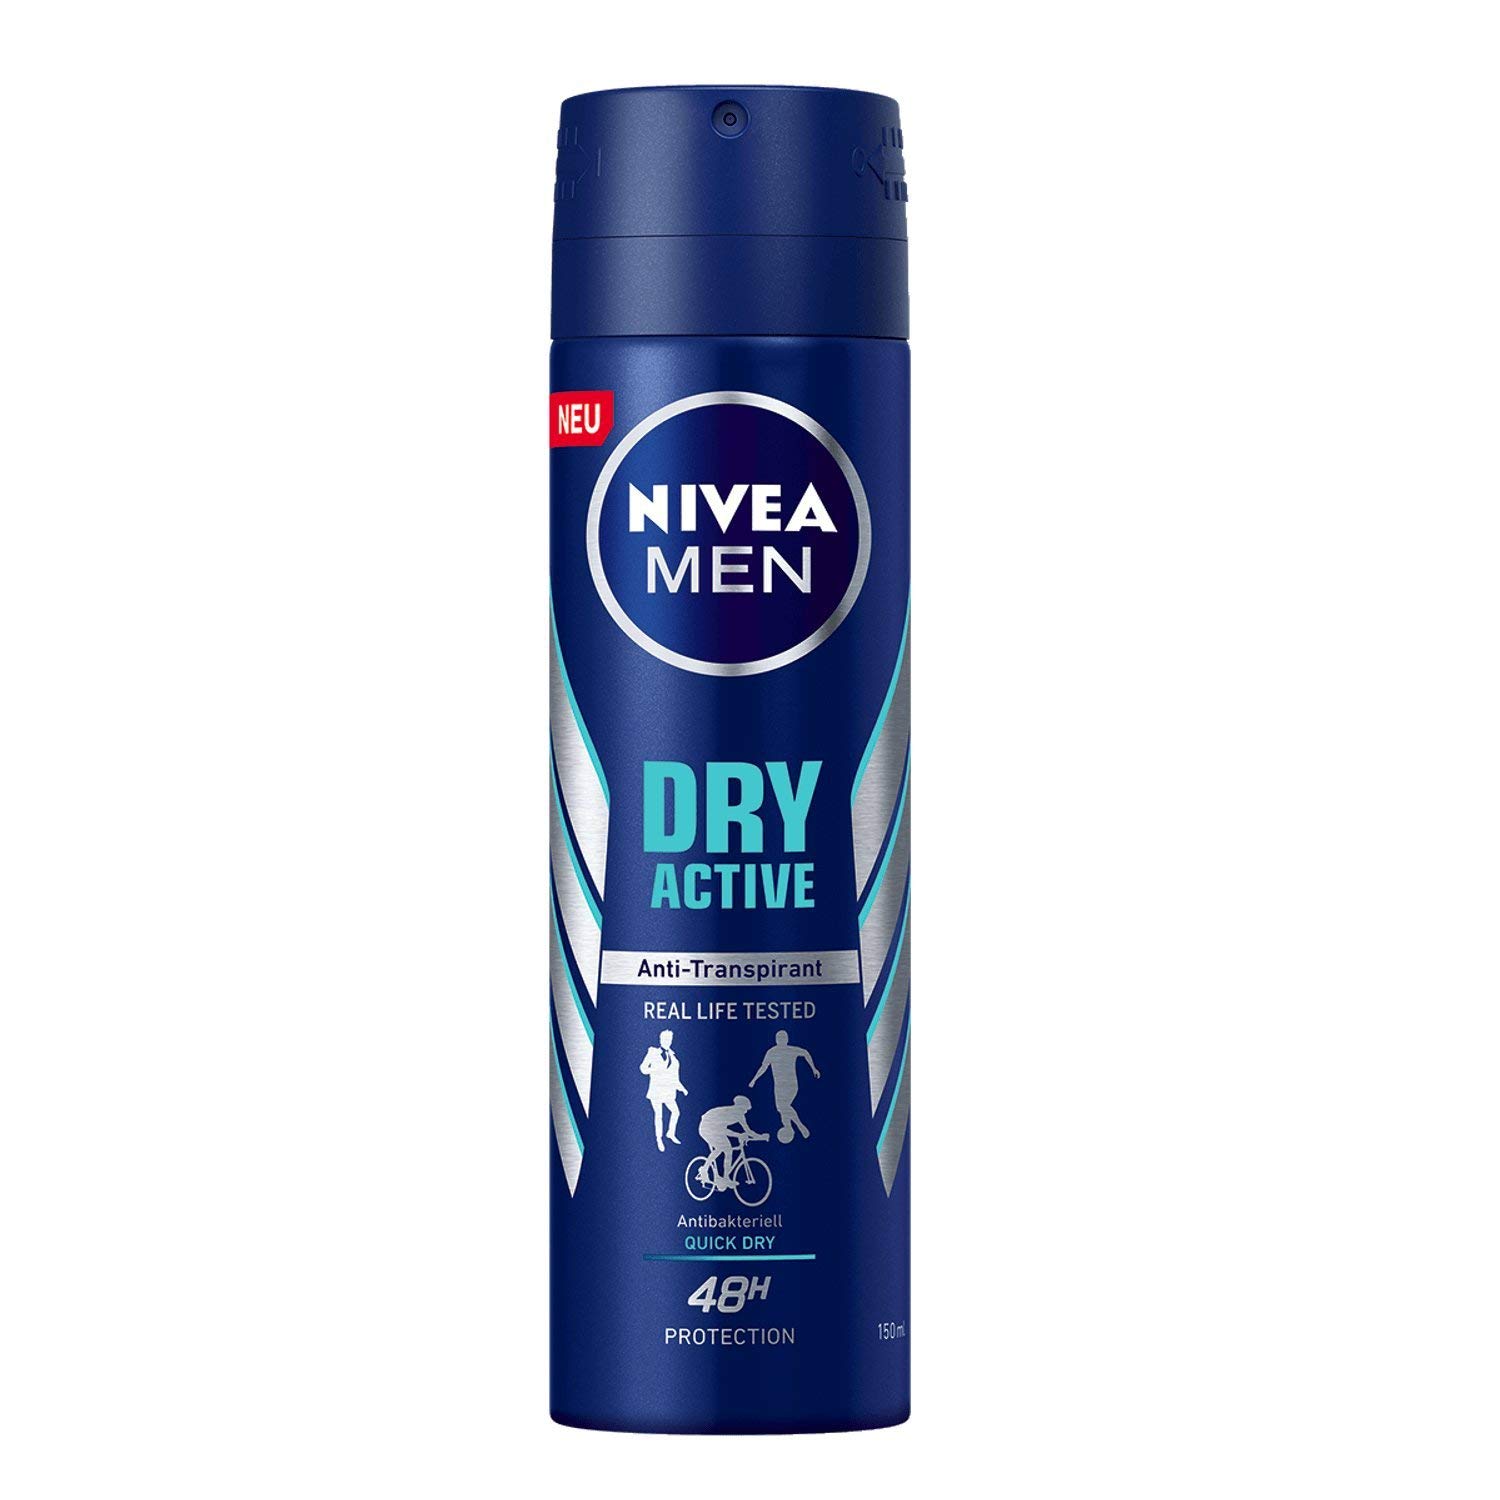 Nivea MEN dry active, Anti Transpirant 48h, 48h protection, Deo Spray, 4er Pack, (4x 150ml)